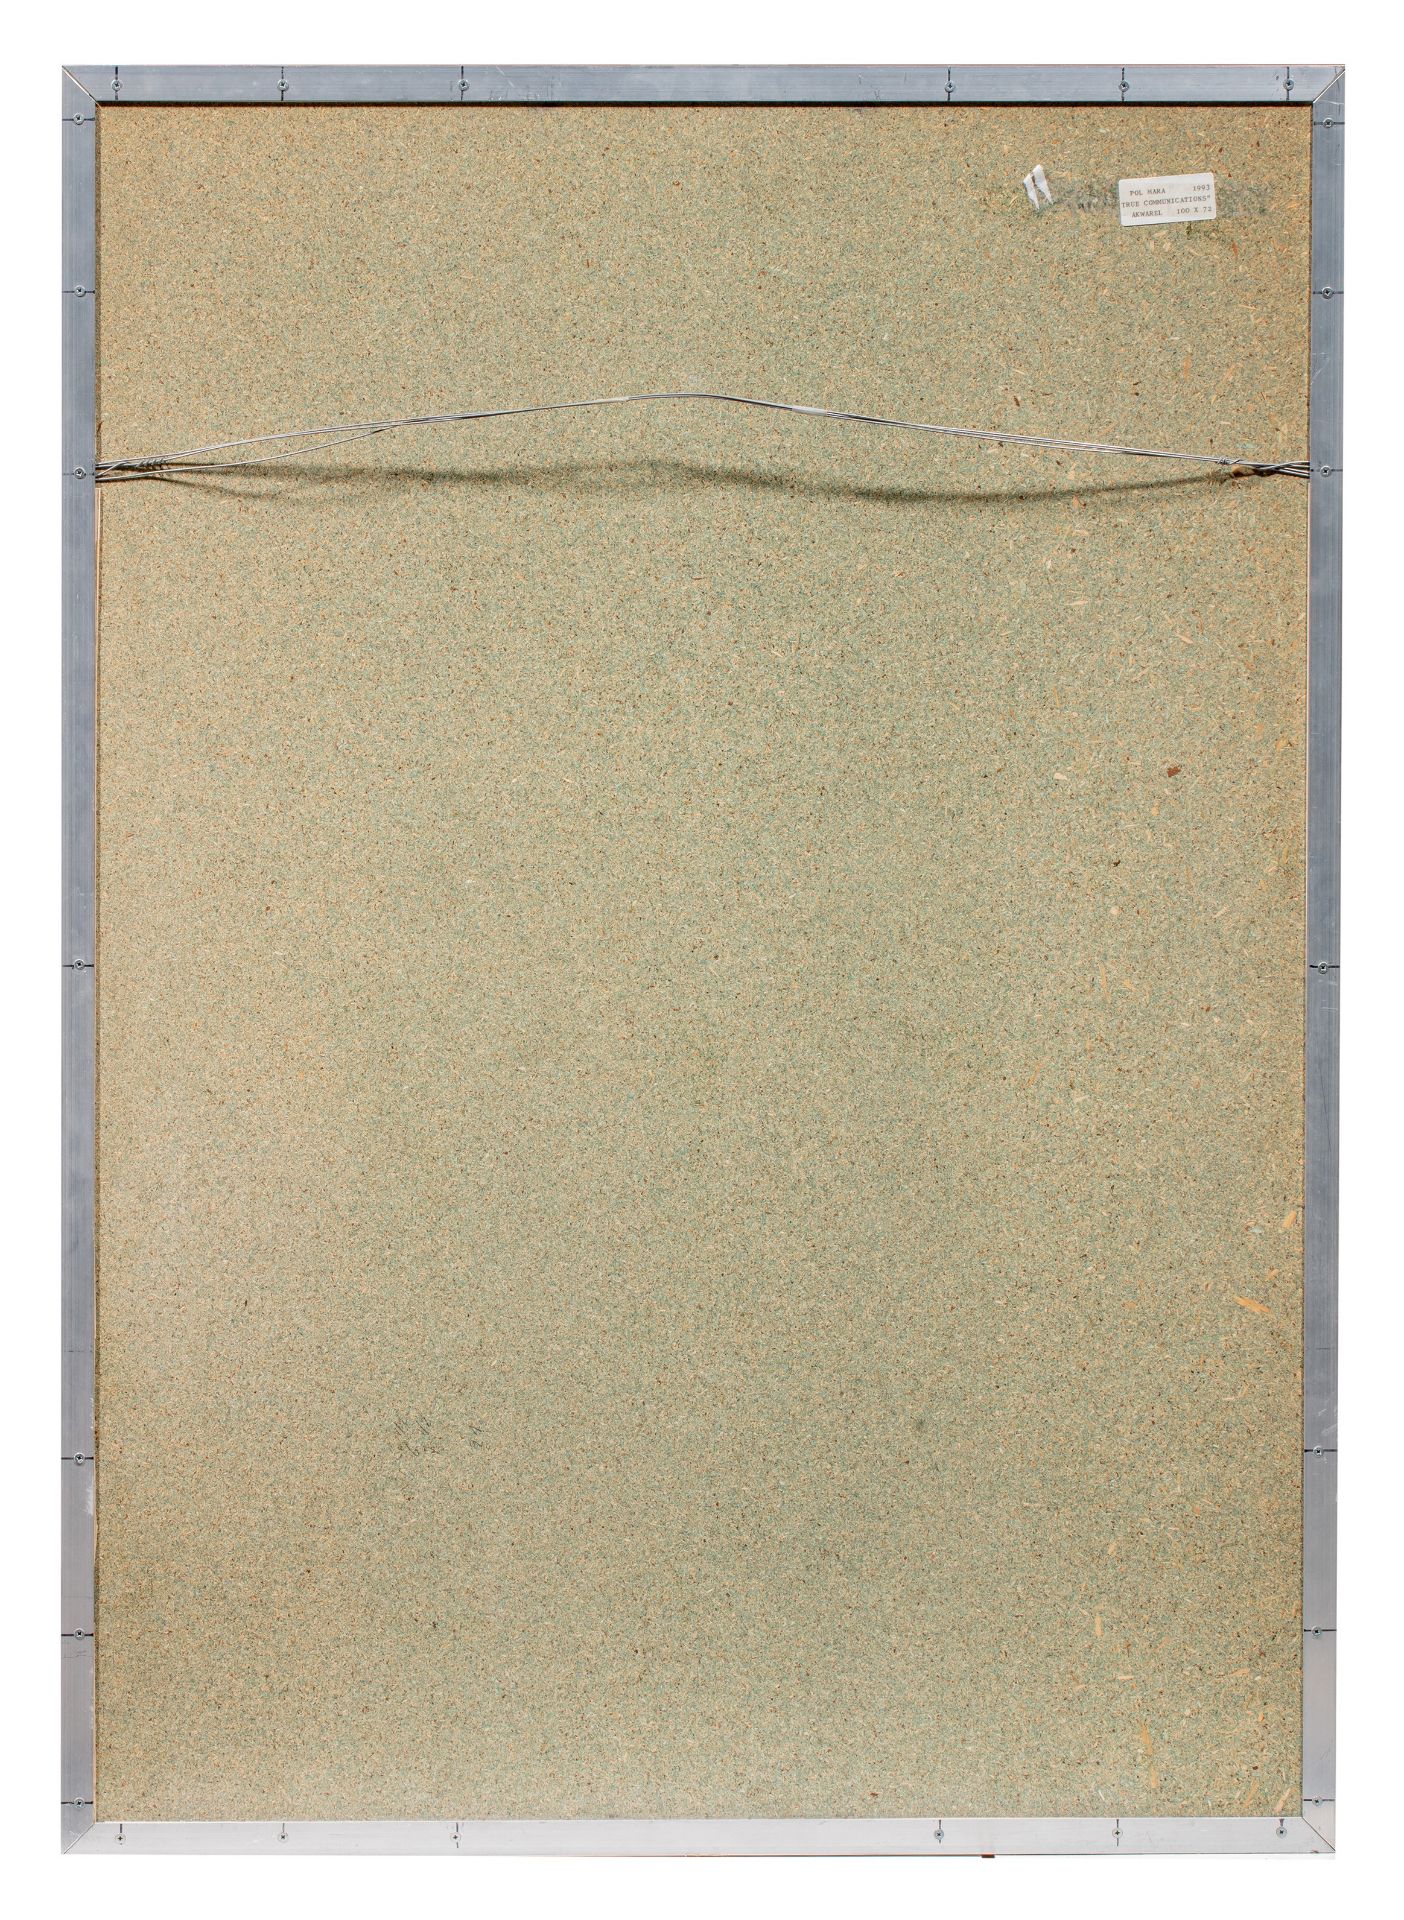 Pol Mara (1920-1998), 'True communications', watercolour on paper, 1993, 70 x 49 cm - Bild 3 aus 6